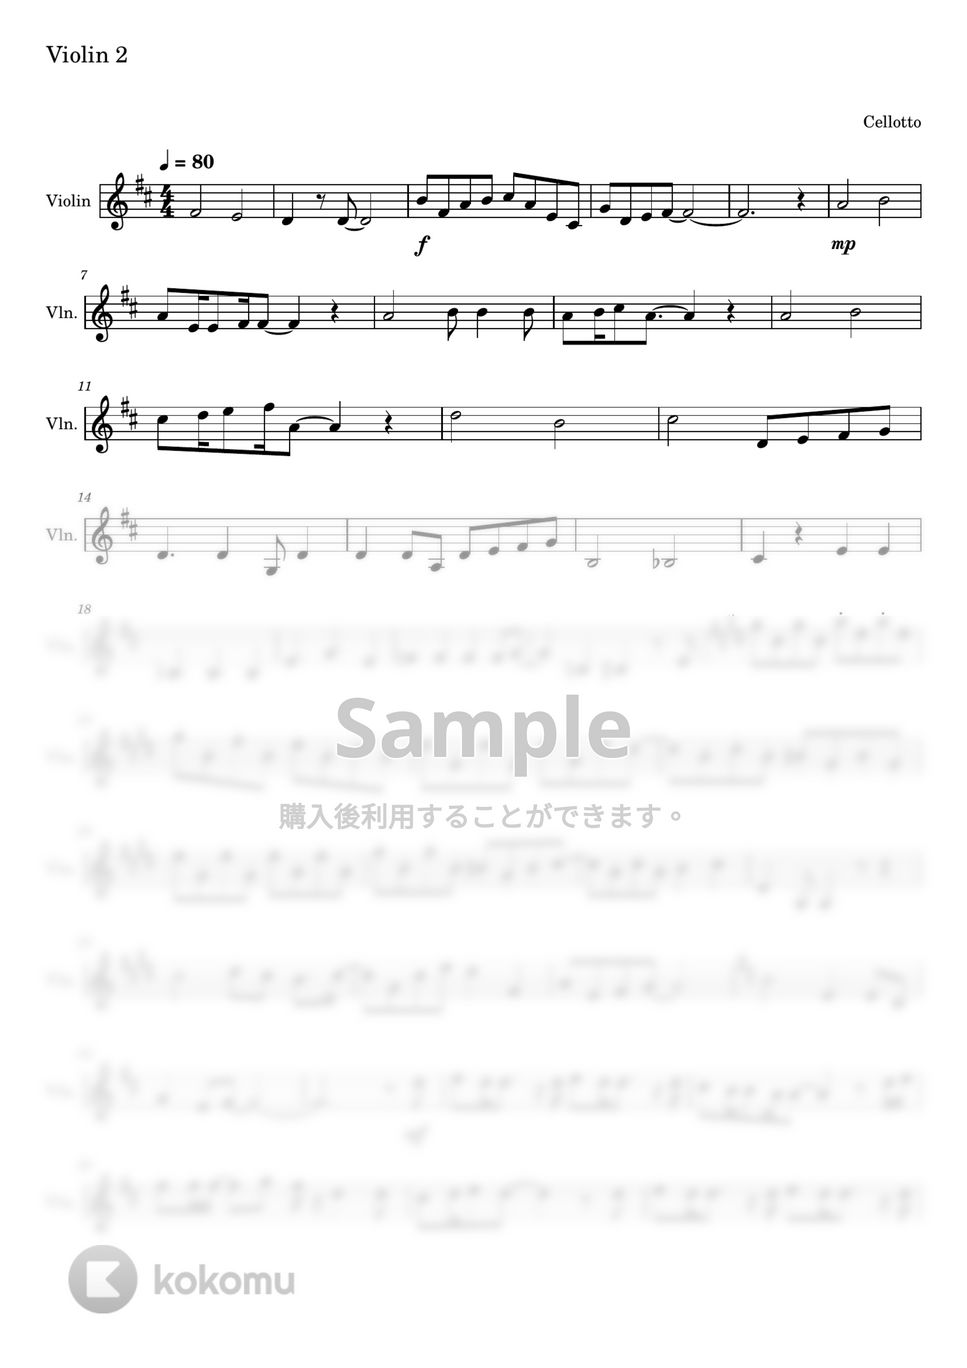 LiSA - 炎 (ヴァイオリン2 / 弦楽四重奏) by Cellotto